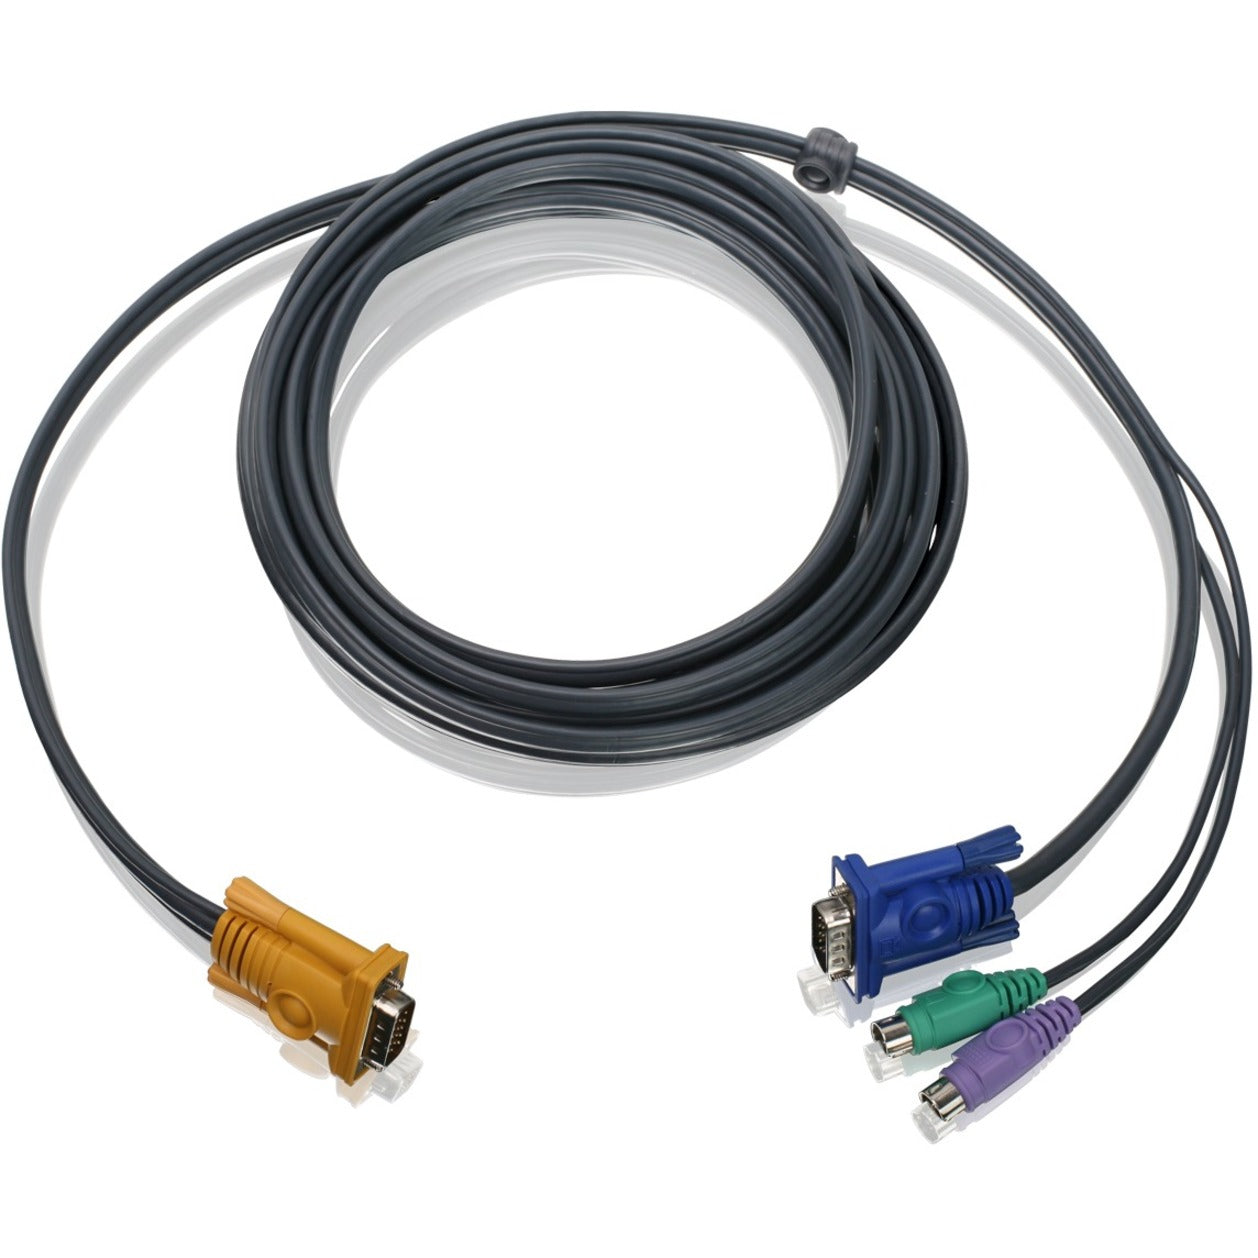 IOGEAR G2L5203PTAA 10ft PS/2 KVM Cable TAA Compliant  IOGEAR = アイオギヤー G2L5203PTAA = G2L5203PTAA 10ft = 10フィート PS/2 = PS/2 KVM Cable = KVMケーブル TAA Compliant = TAA適合